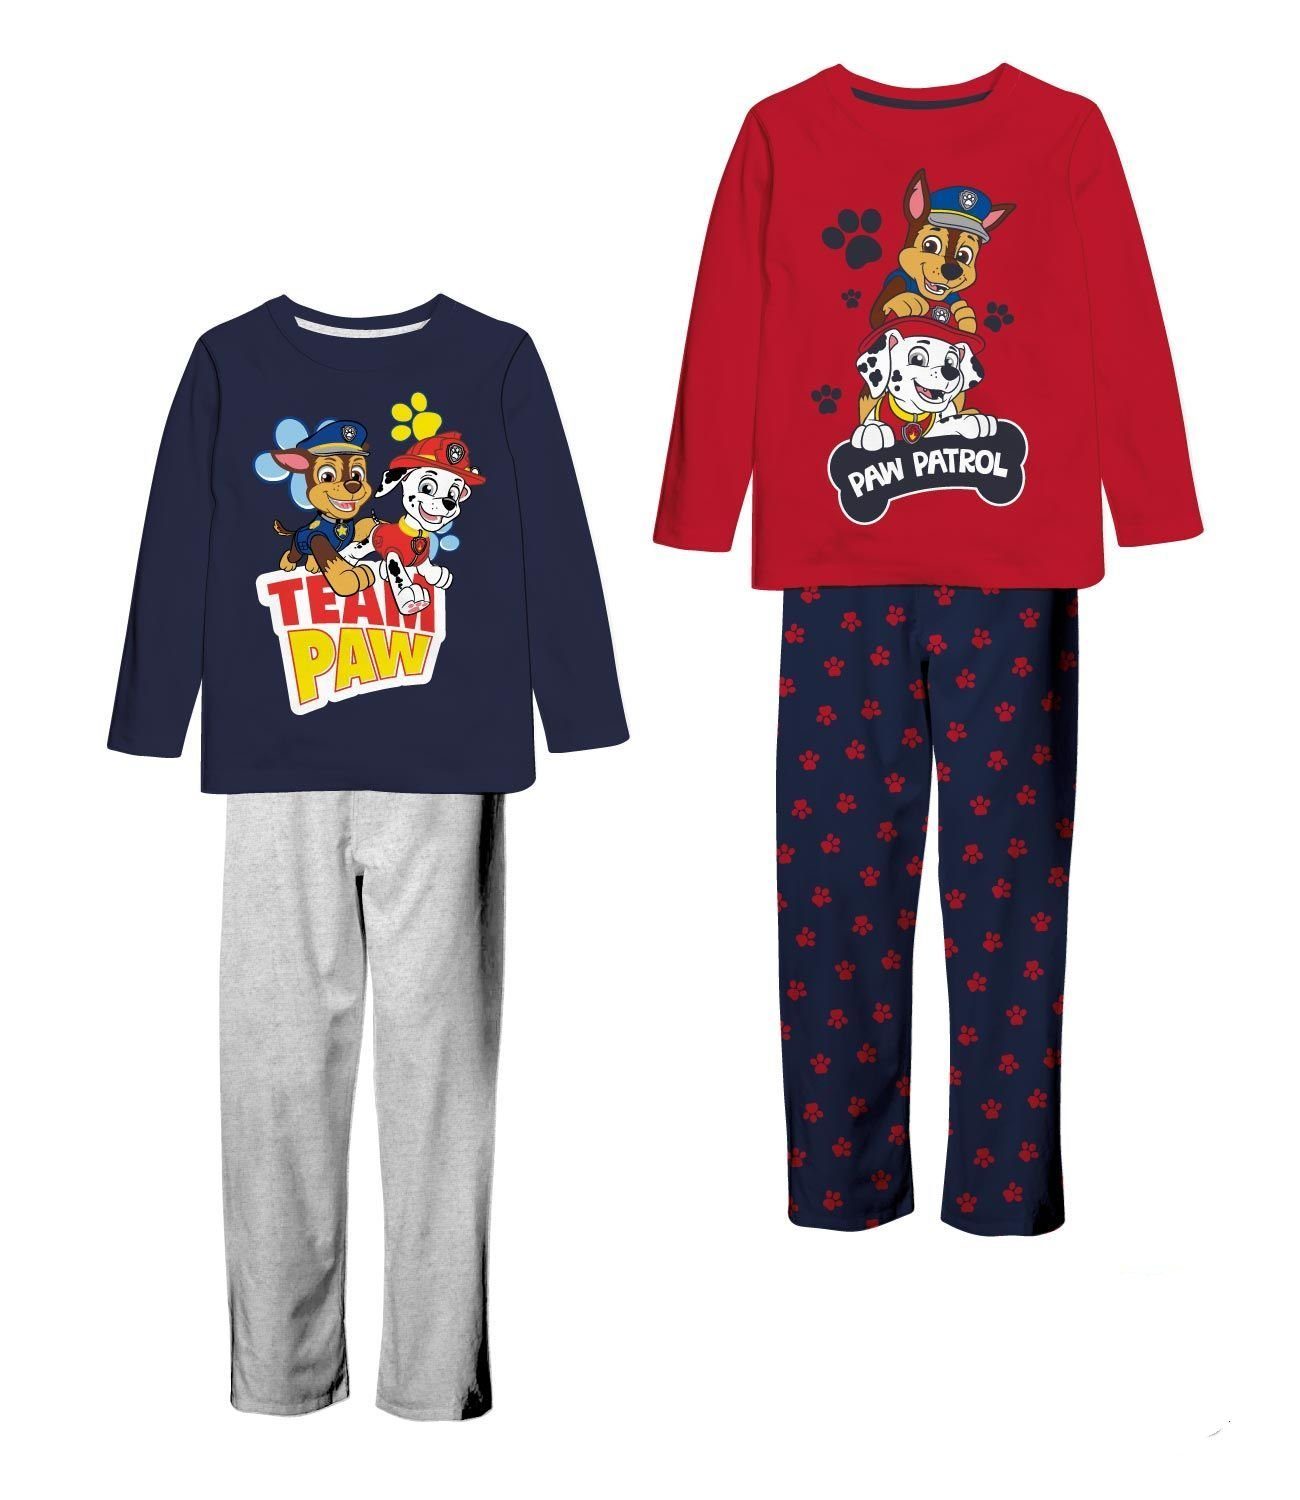 PAW PATROL Pyjama 2x PAW PATROL PYJAMA Set Doppelpack Jungen Schlafanzug  lang rot und blau Gr. 92 98/104 110/116 122/128